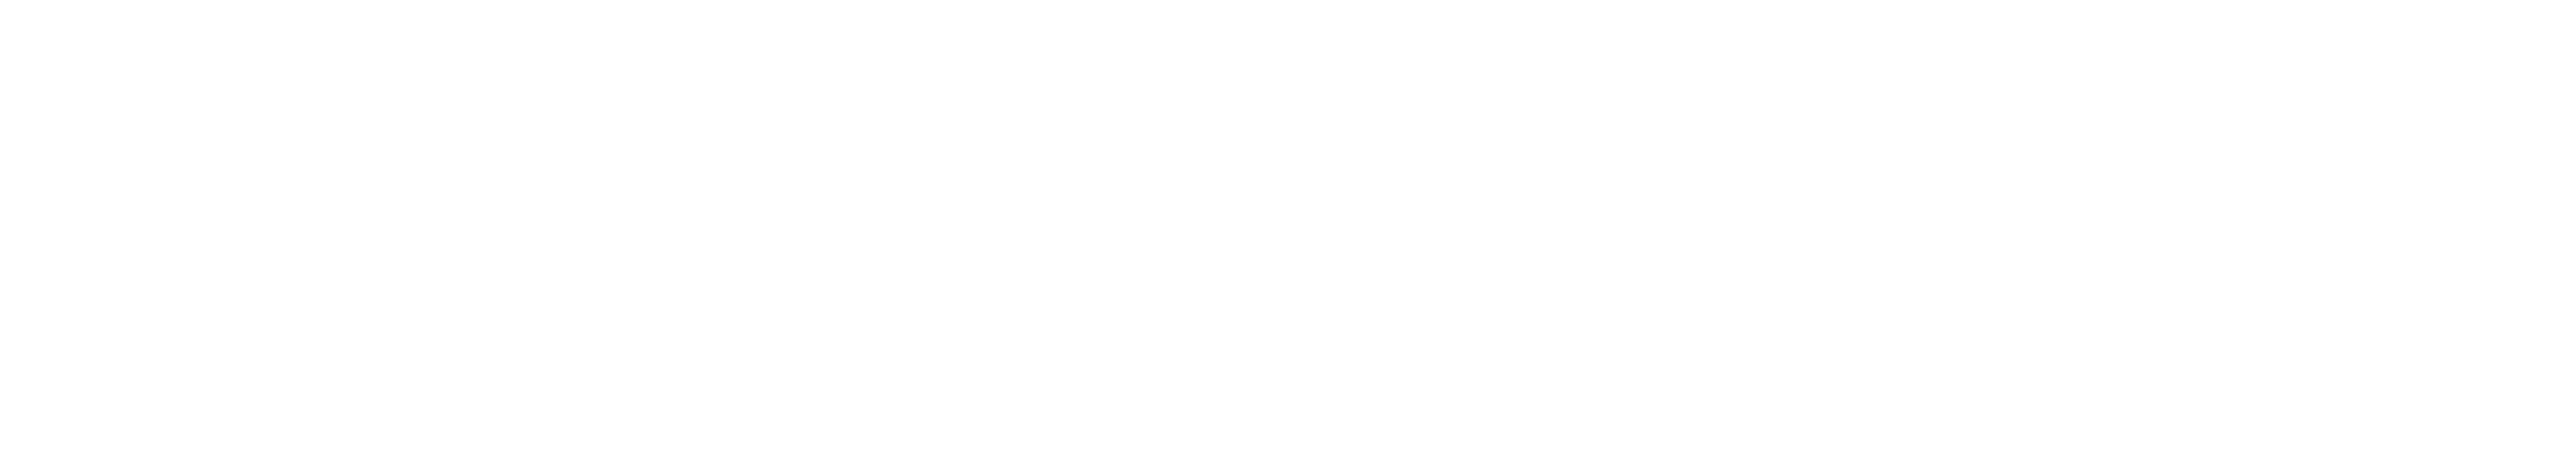 Butch and Sundance: The Early Days logo